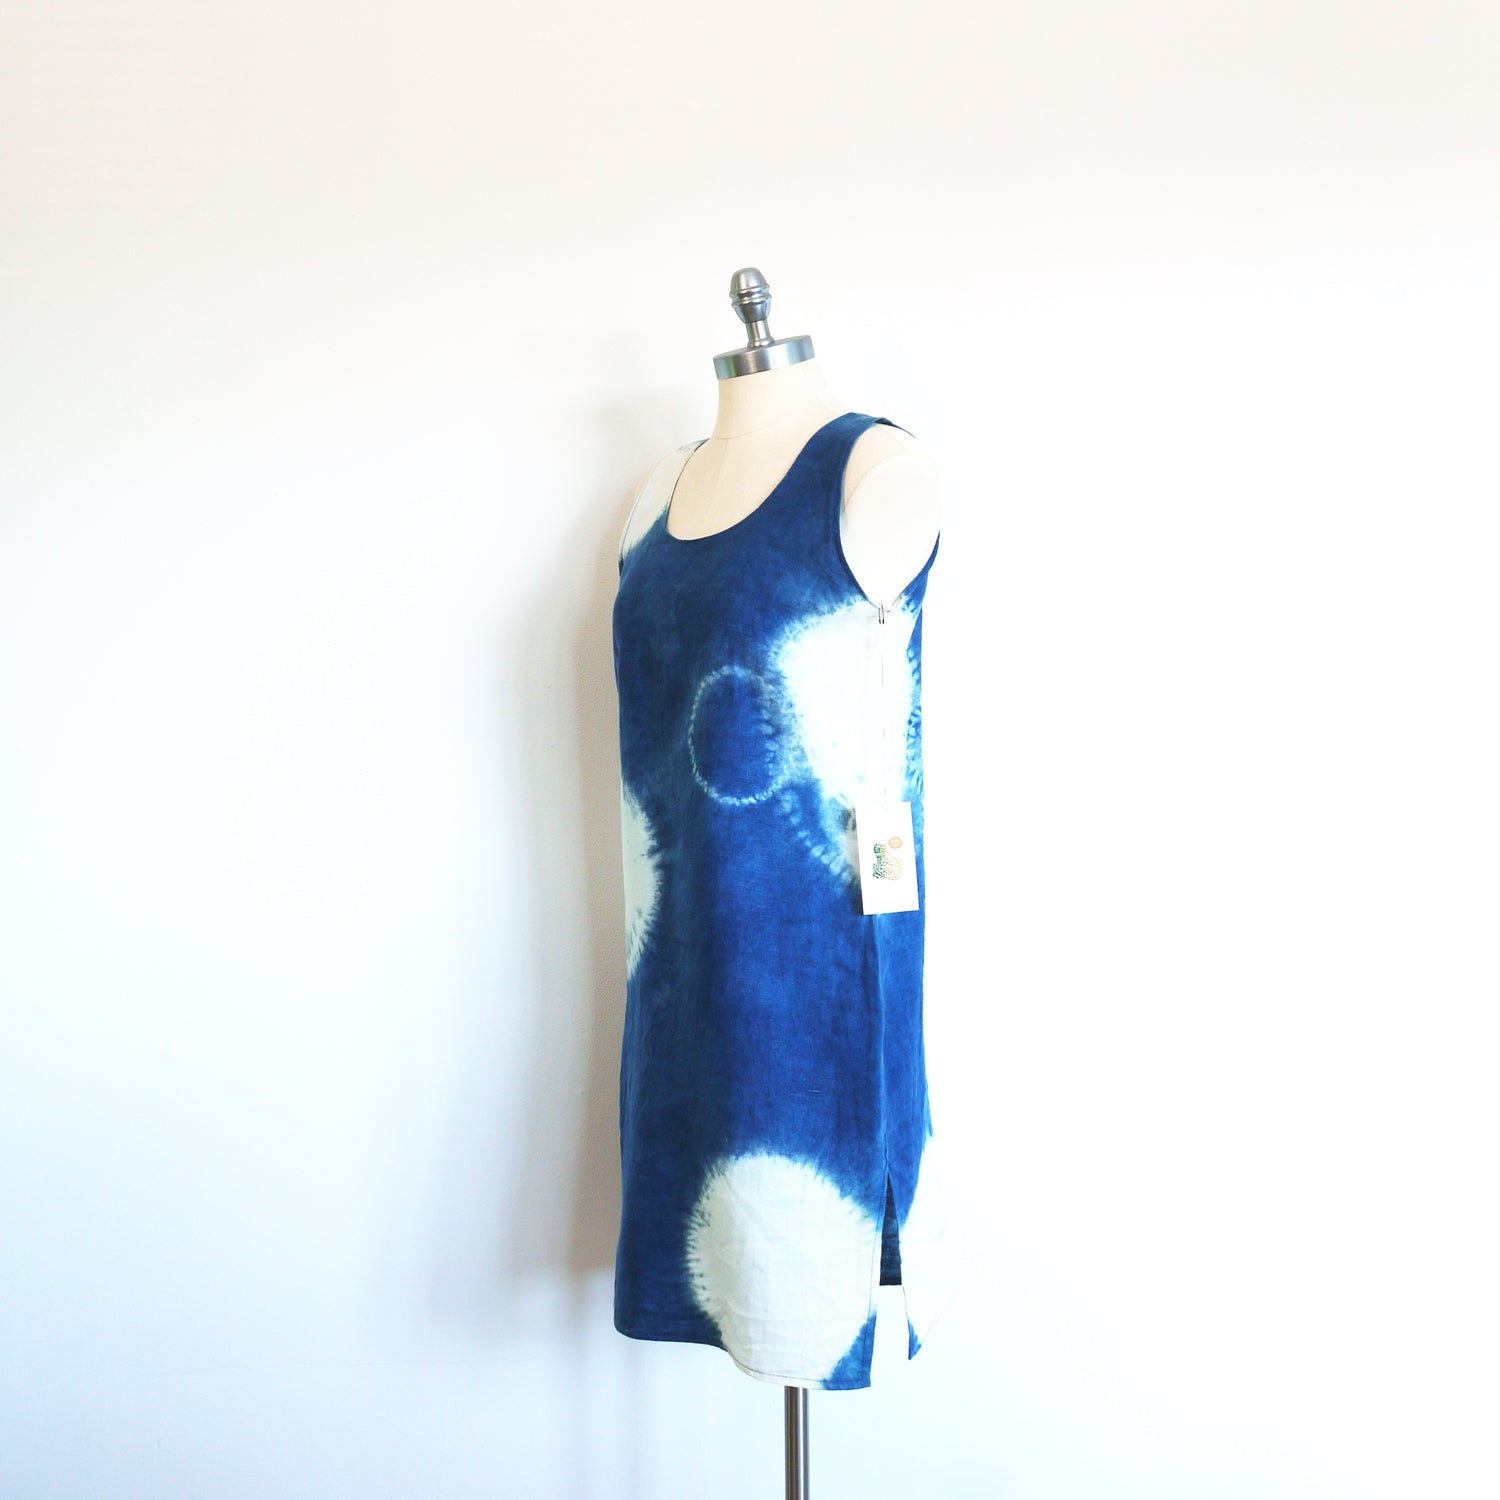 INDIGO CIRCLE tank dress.  Hand dyed shibori indigo linen dress